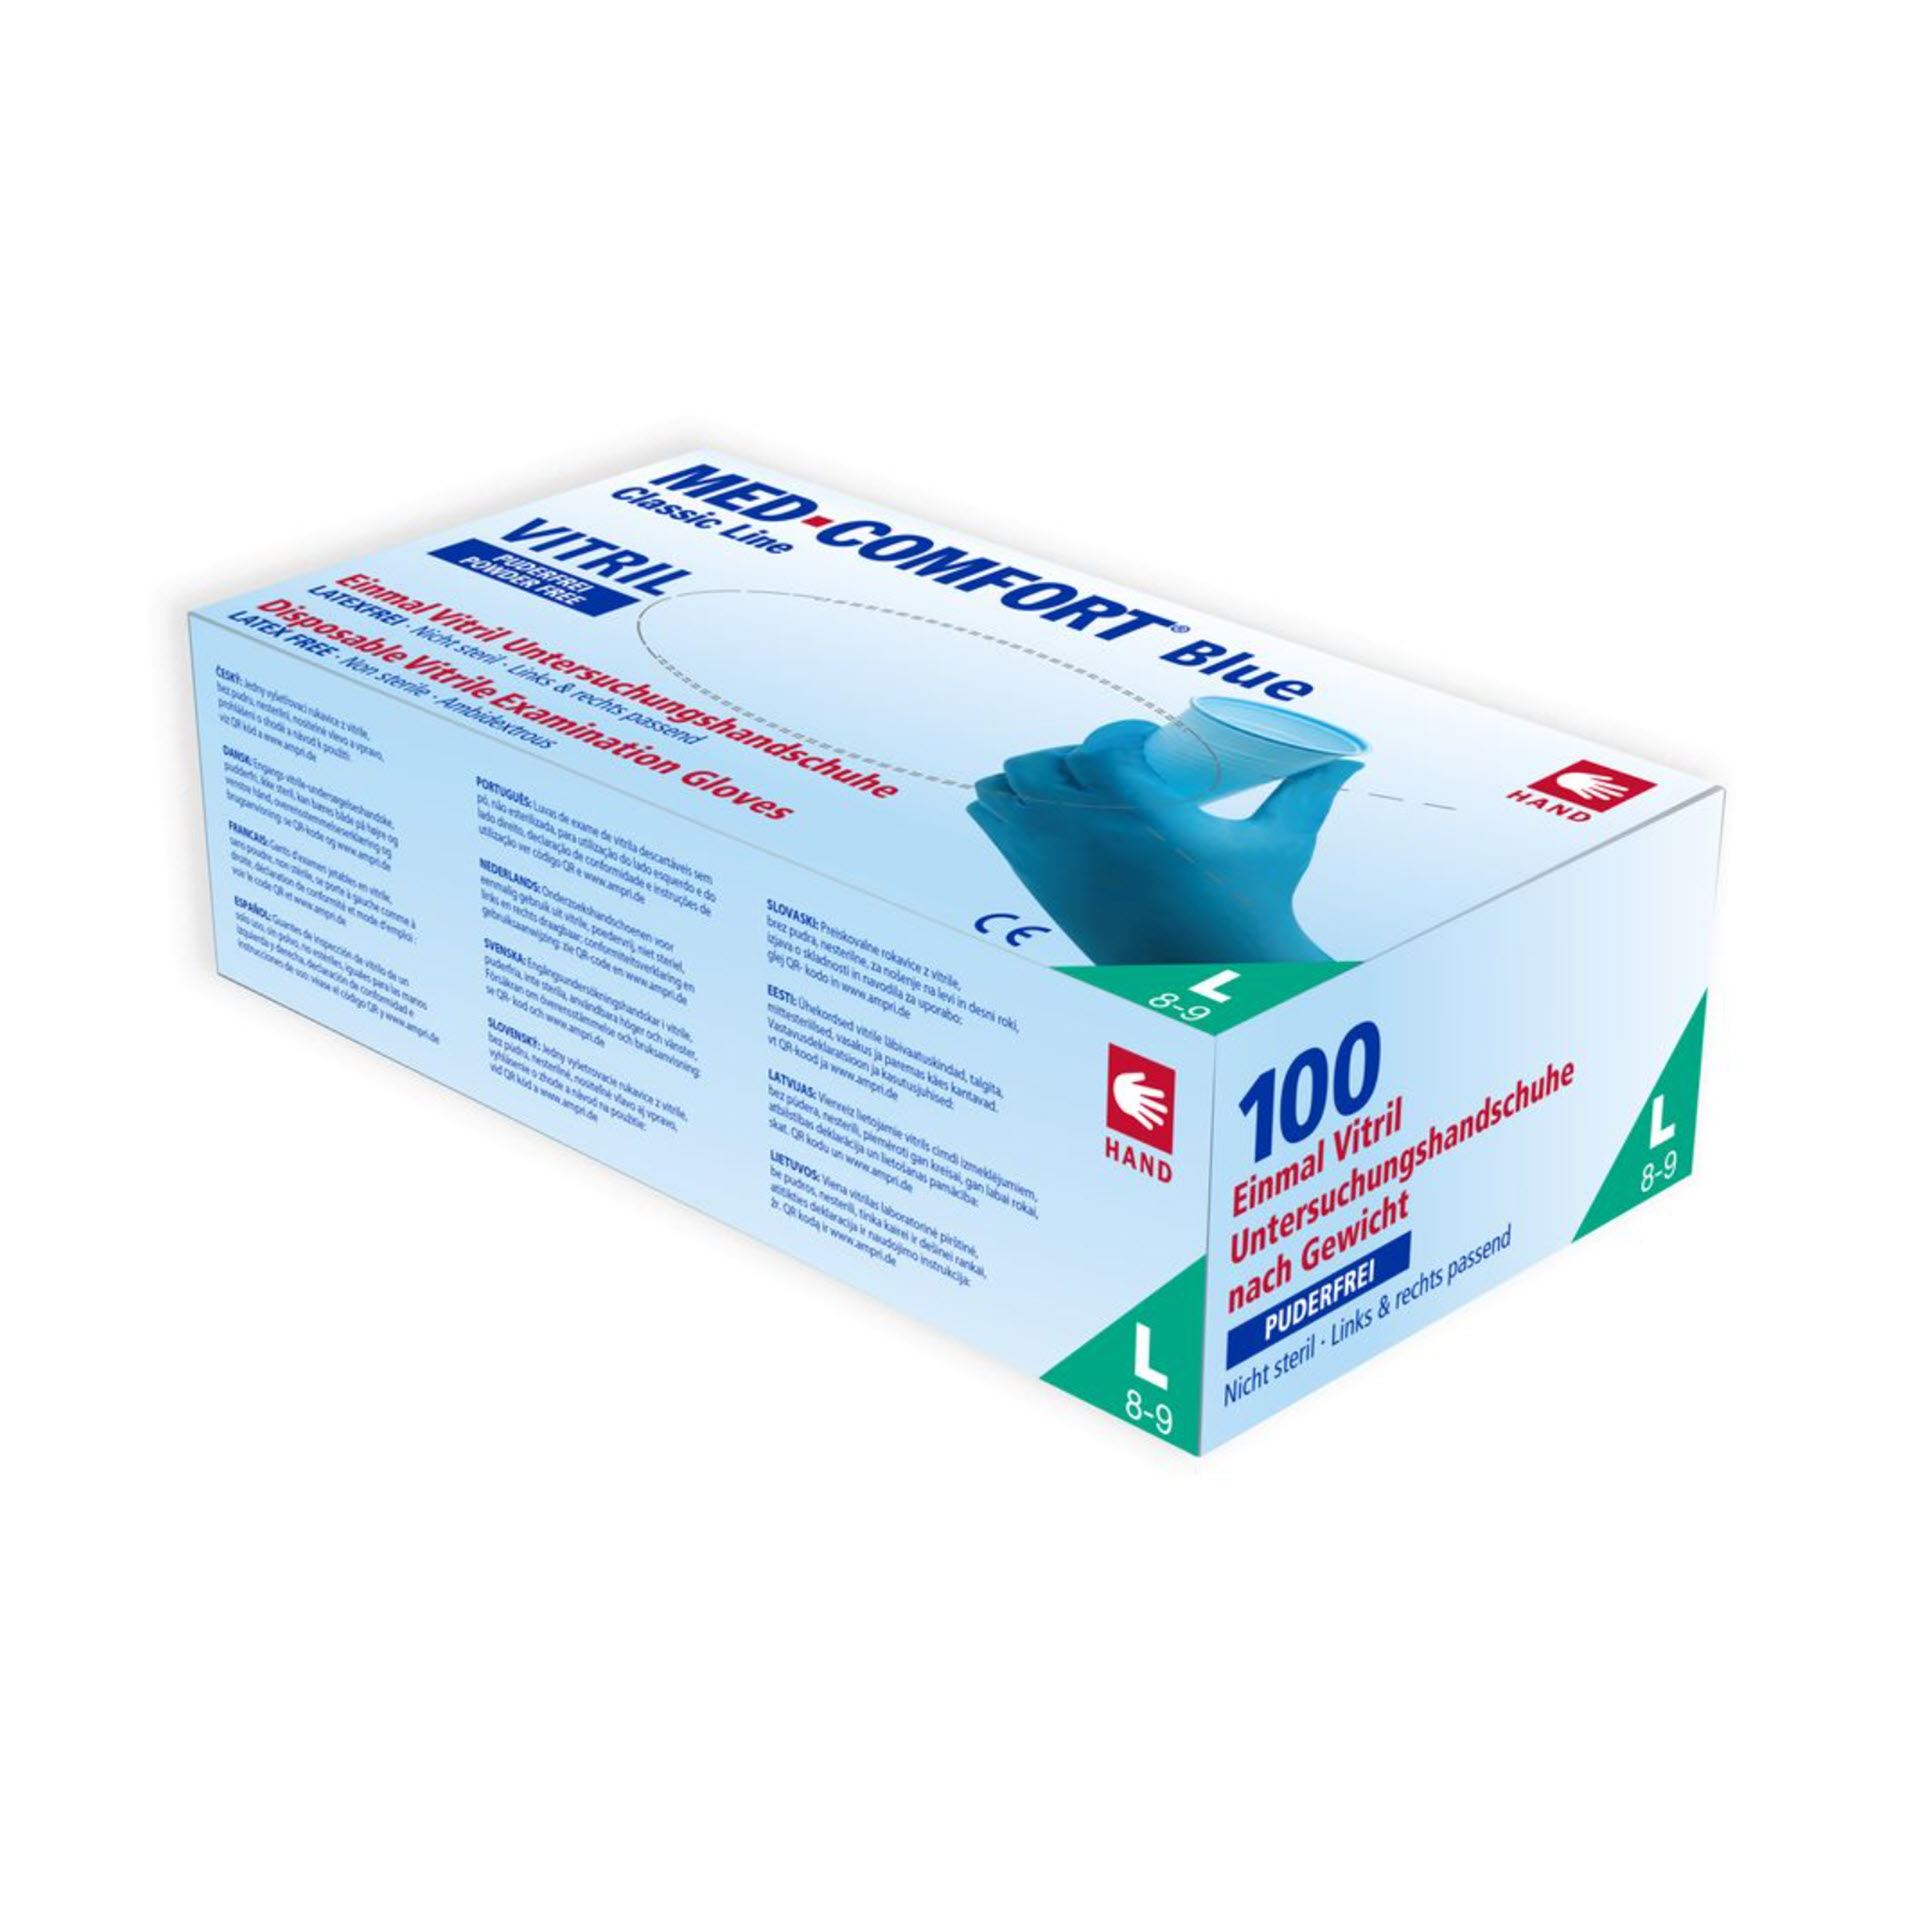 AMPri Vitril Med-Comfort Blue "Vitril" - Einmal Vynil-Nitril Schutz- u. Untersuchungshandschuh 01251